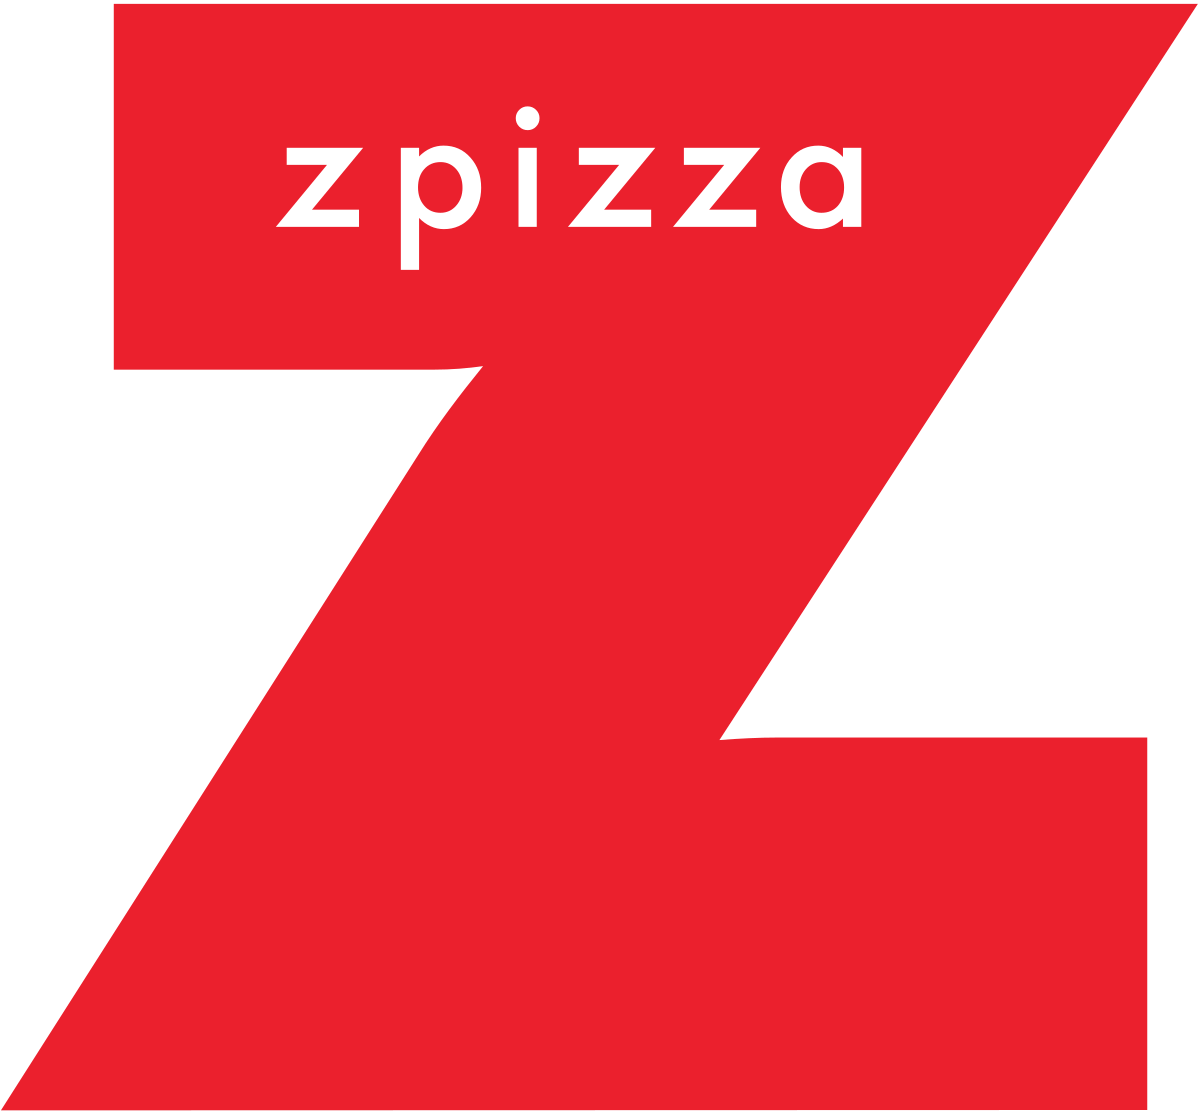 Zpizza Logo - zpizza